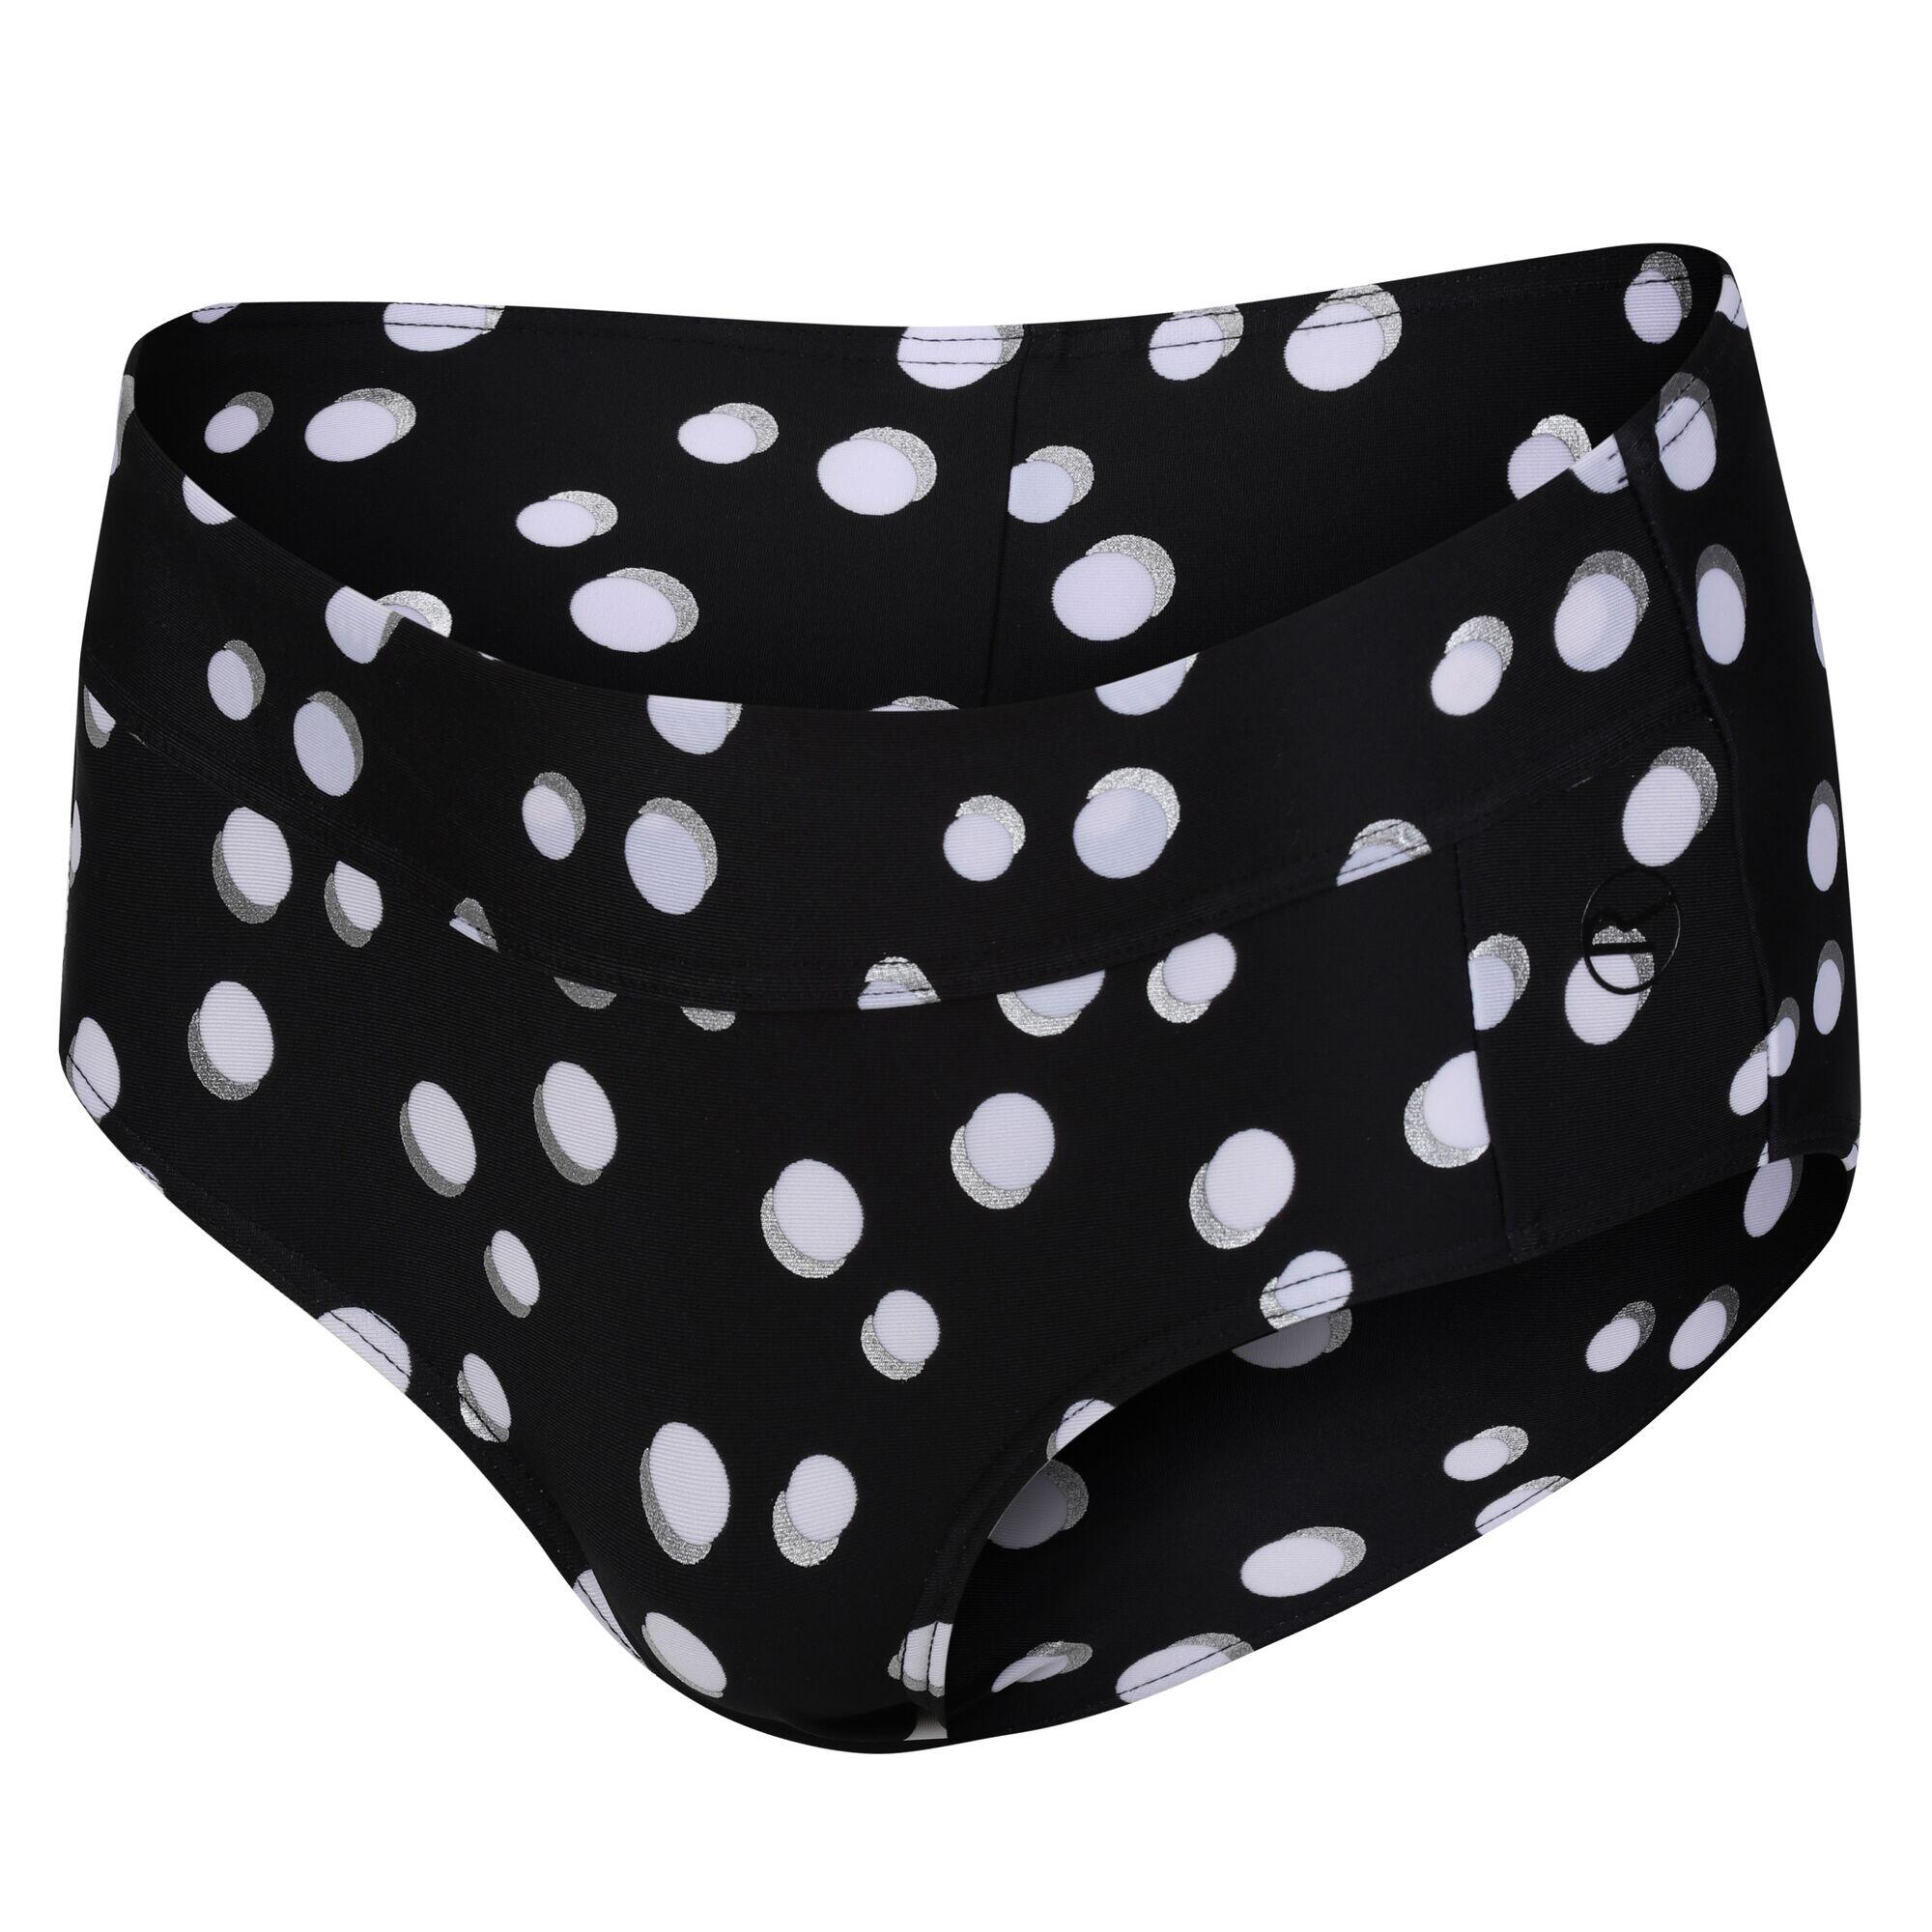 Womens/Ladies Paloma Polka Dot Bikini Bottoms (Black/White) 4/5